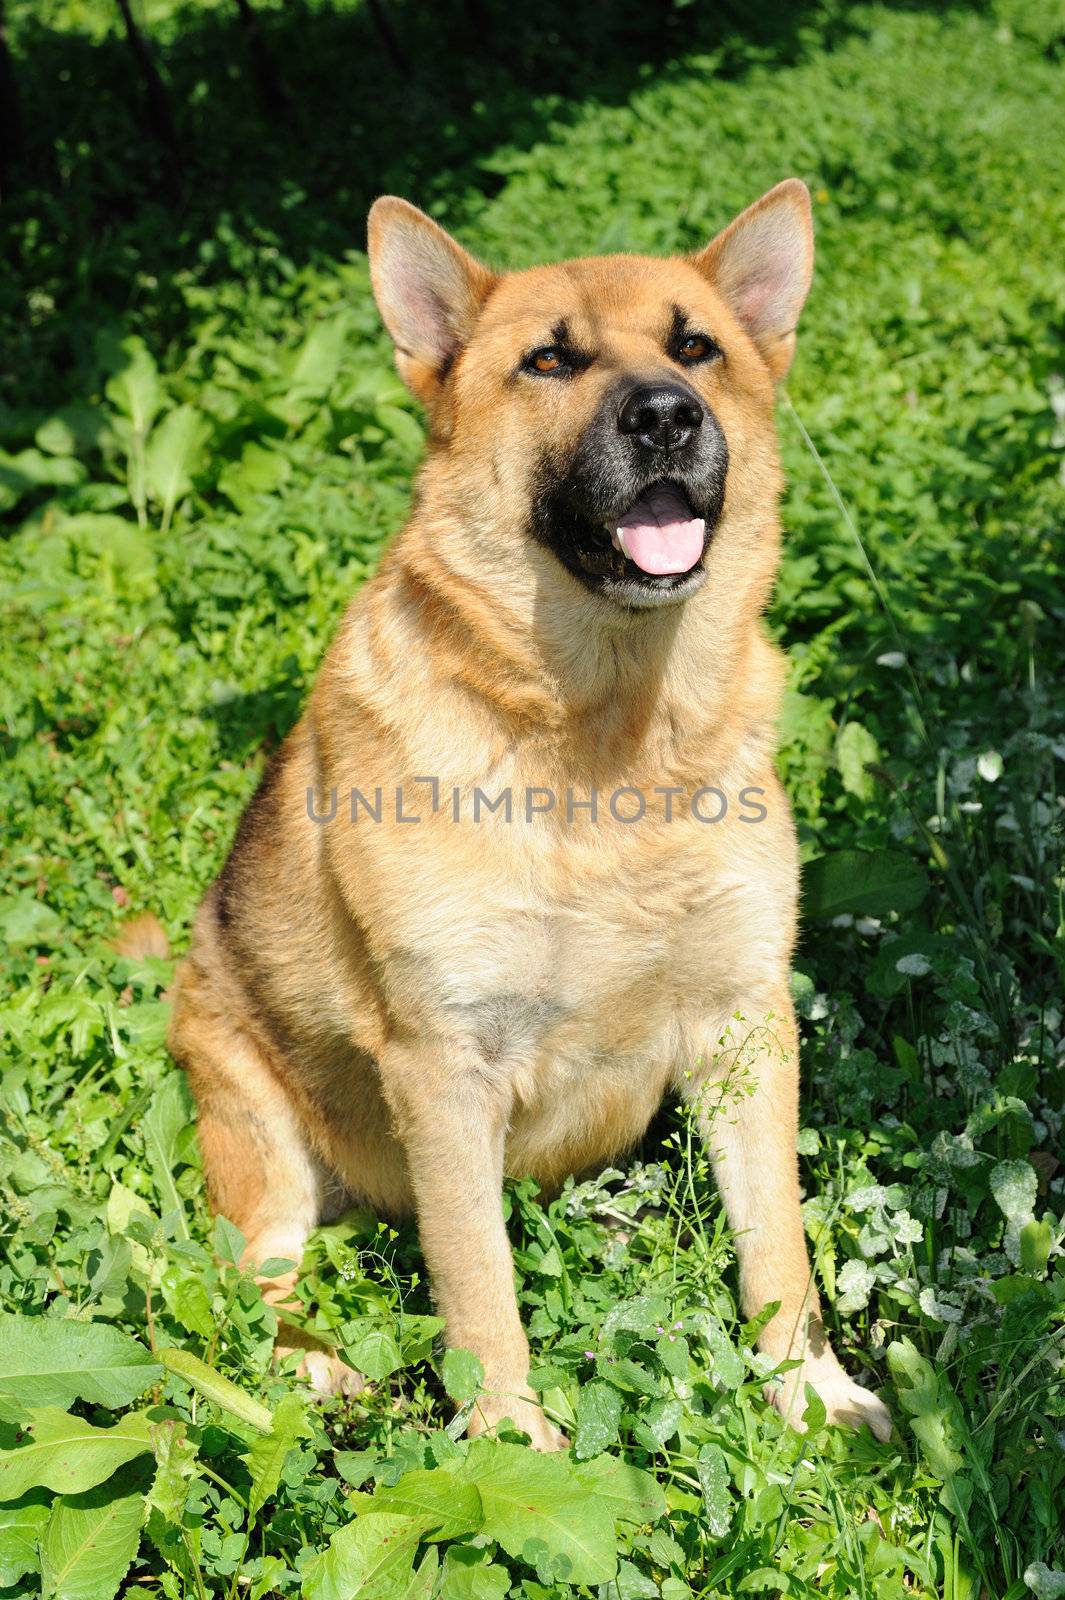 An image of shepherd dog in green garden